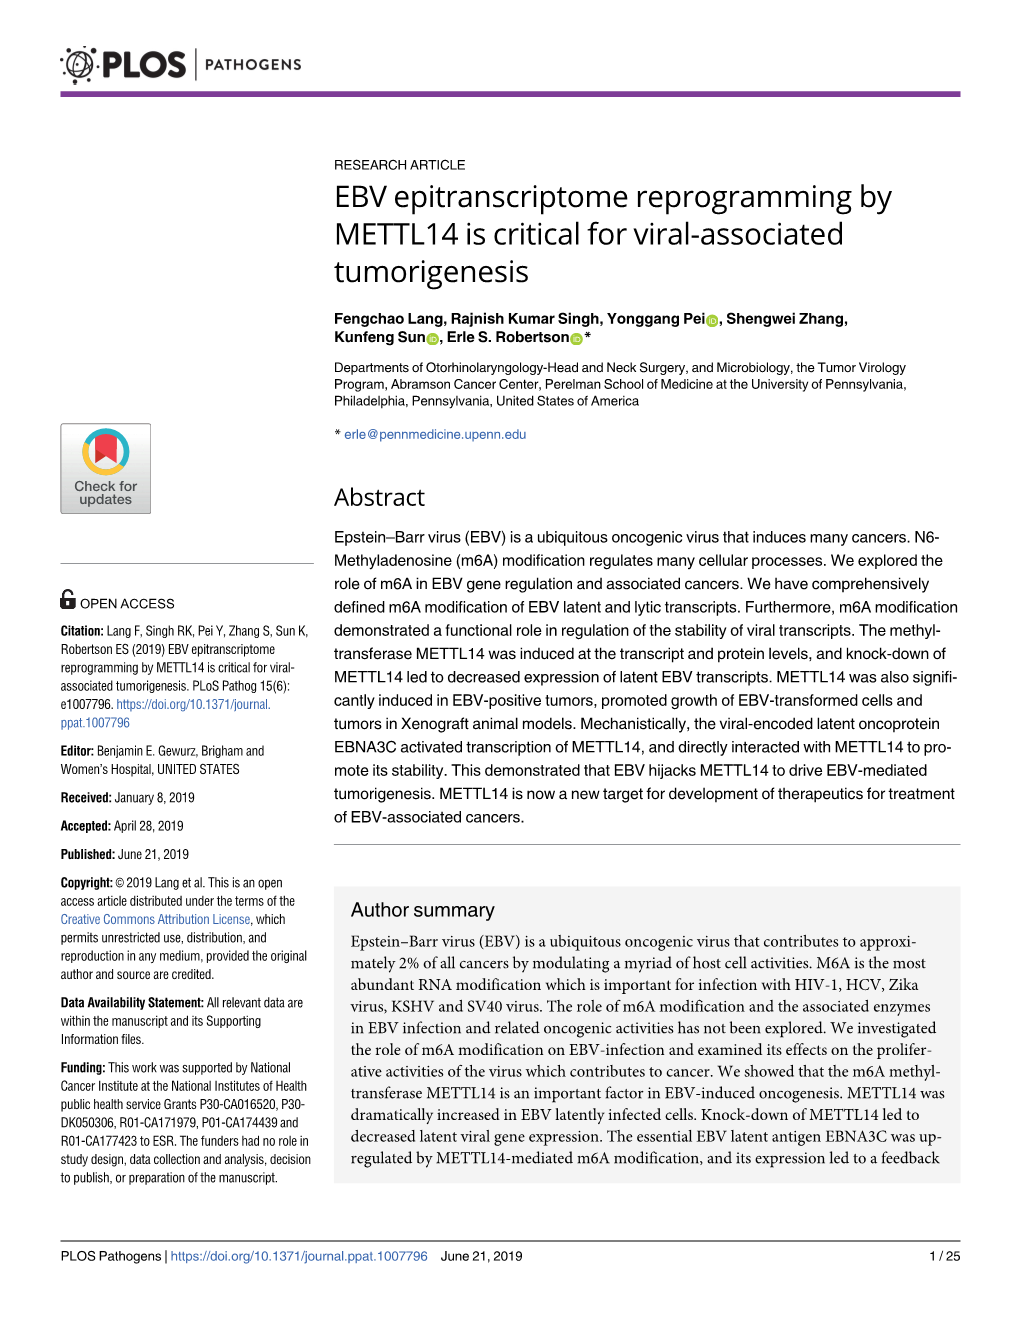 EBV Epitranscriptome Reprogramming by METTL14 Is Critical for Viral-Associated Tumorigenesis